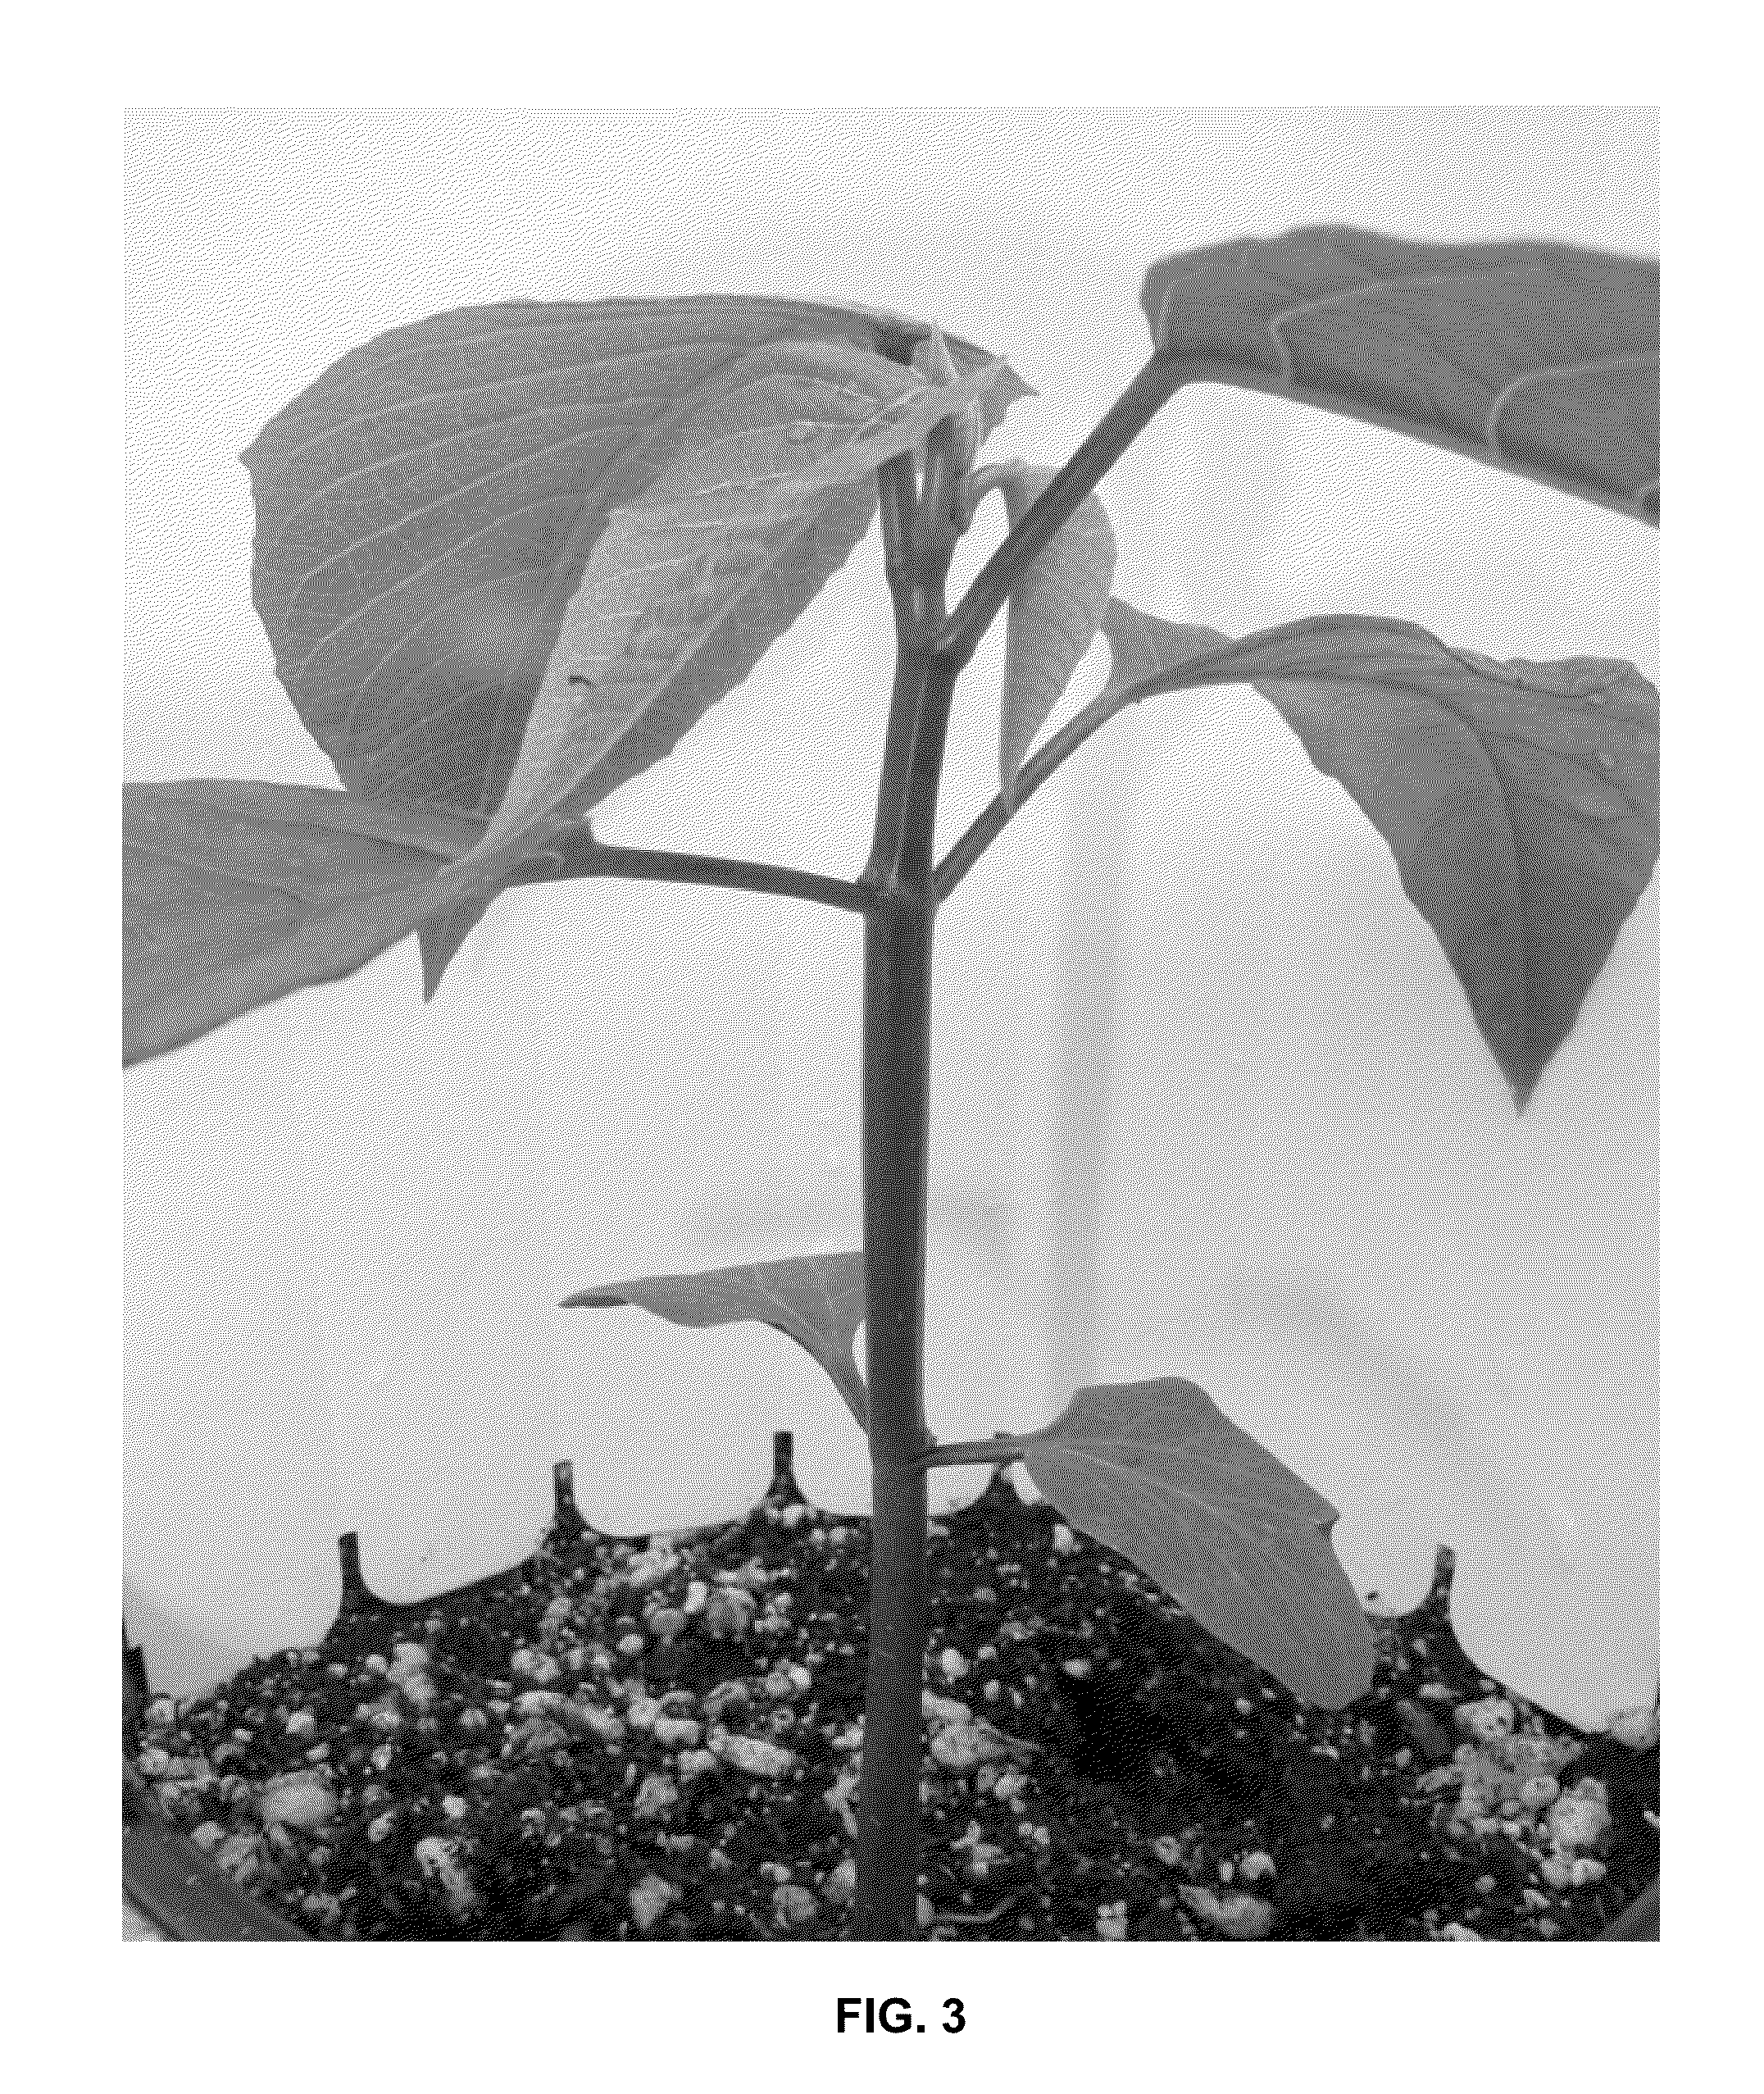 Free branching poinsettia